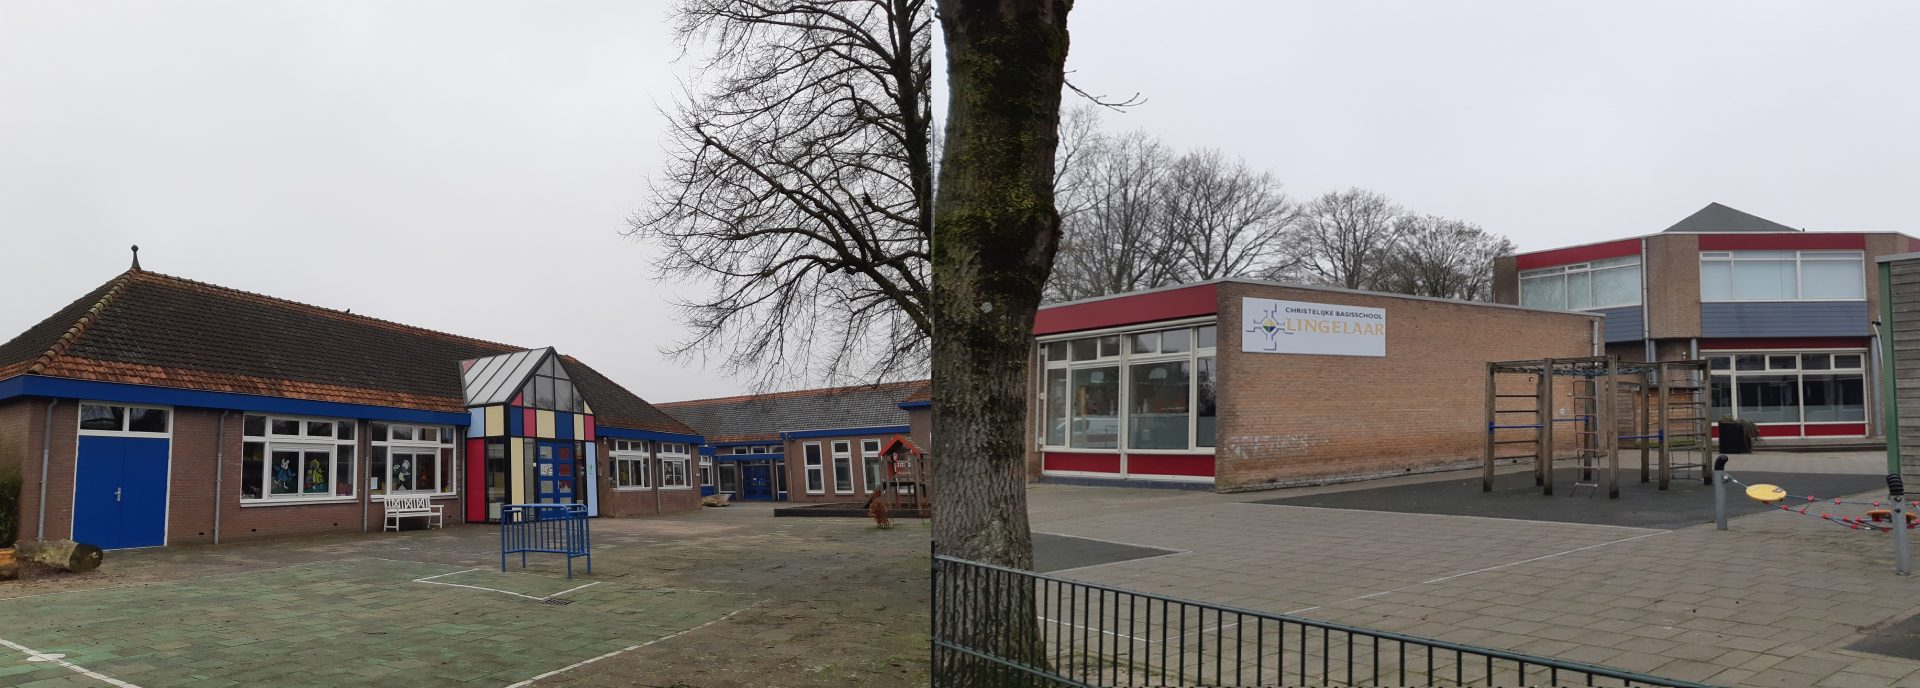 Brede school in Beesd